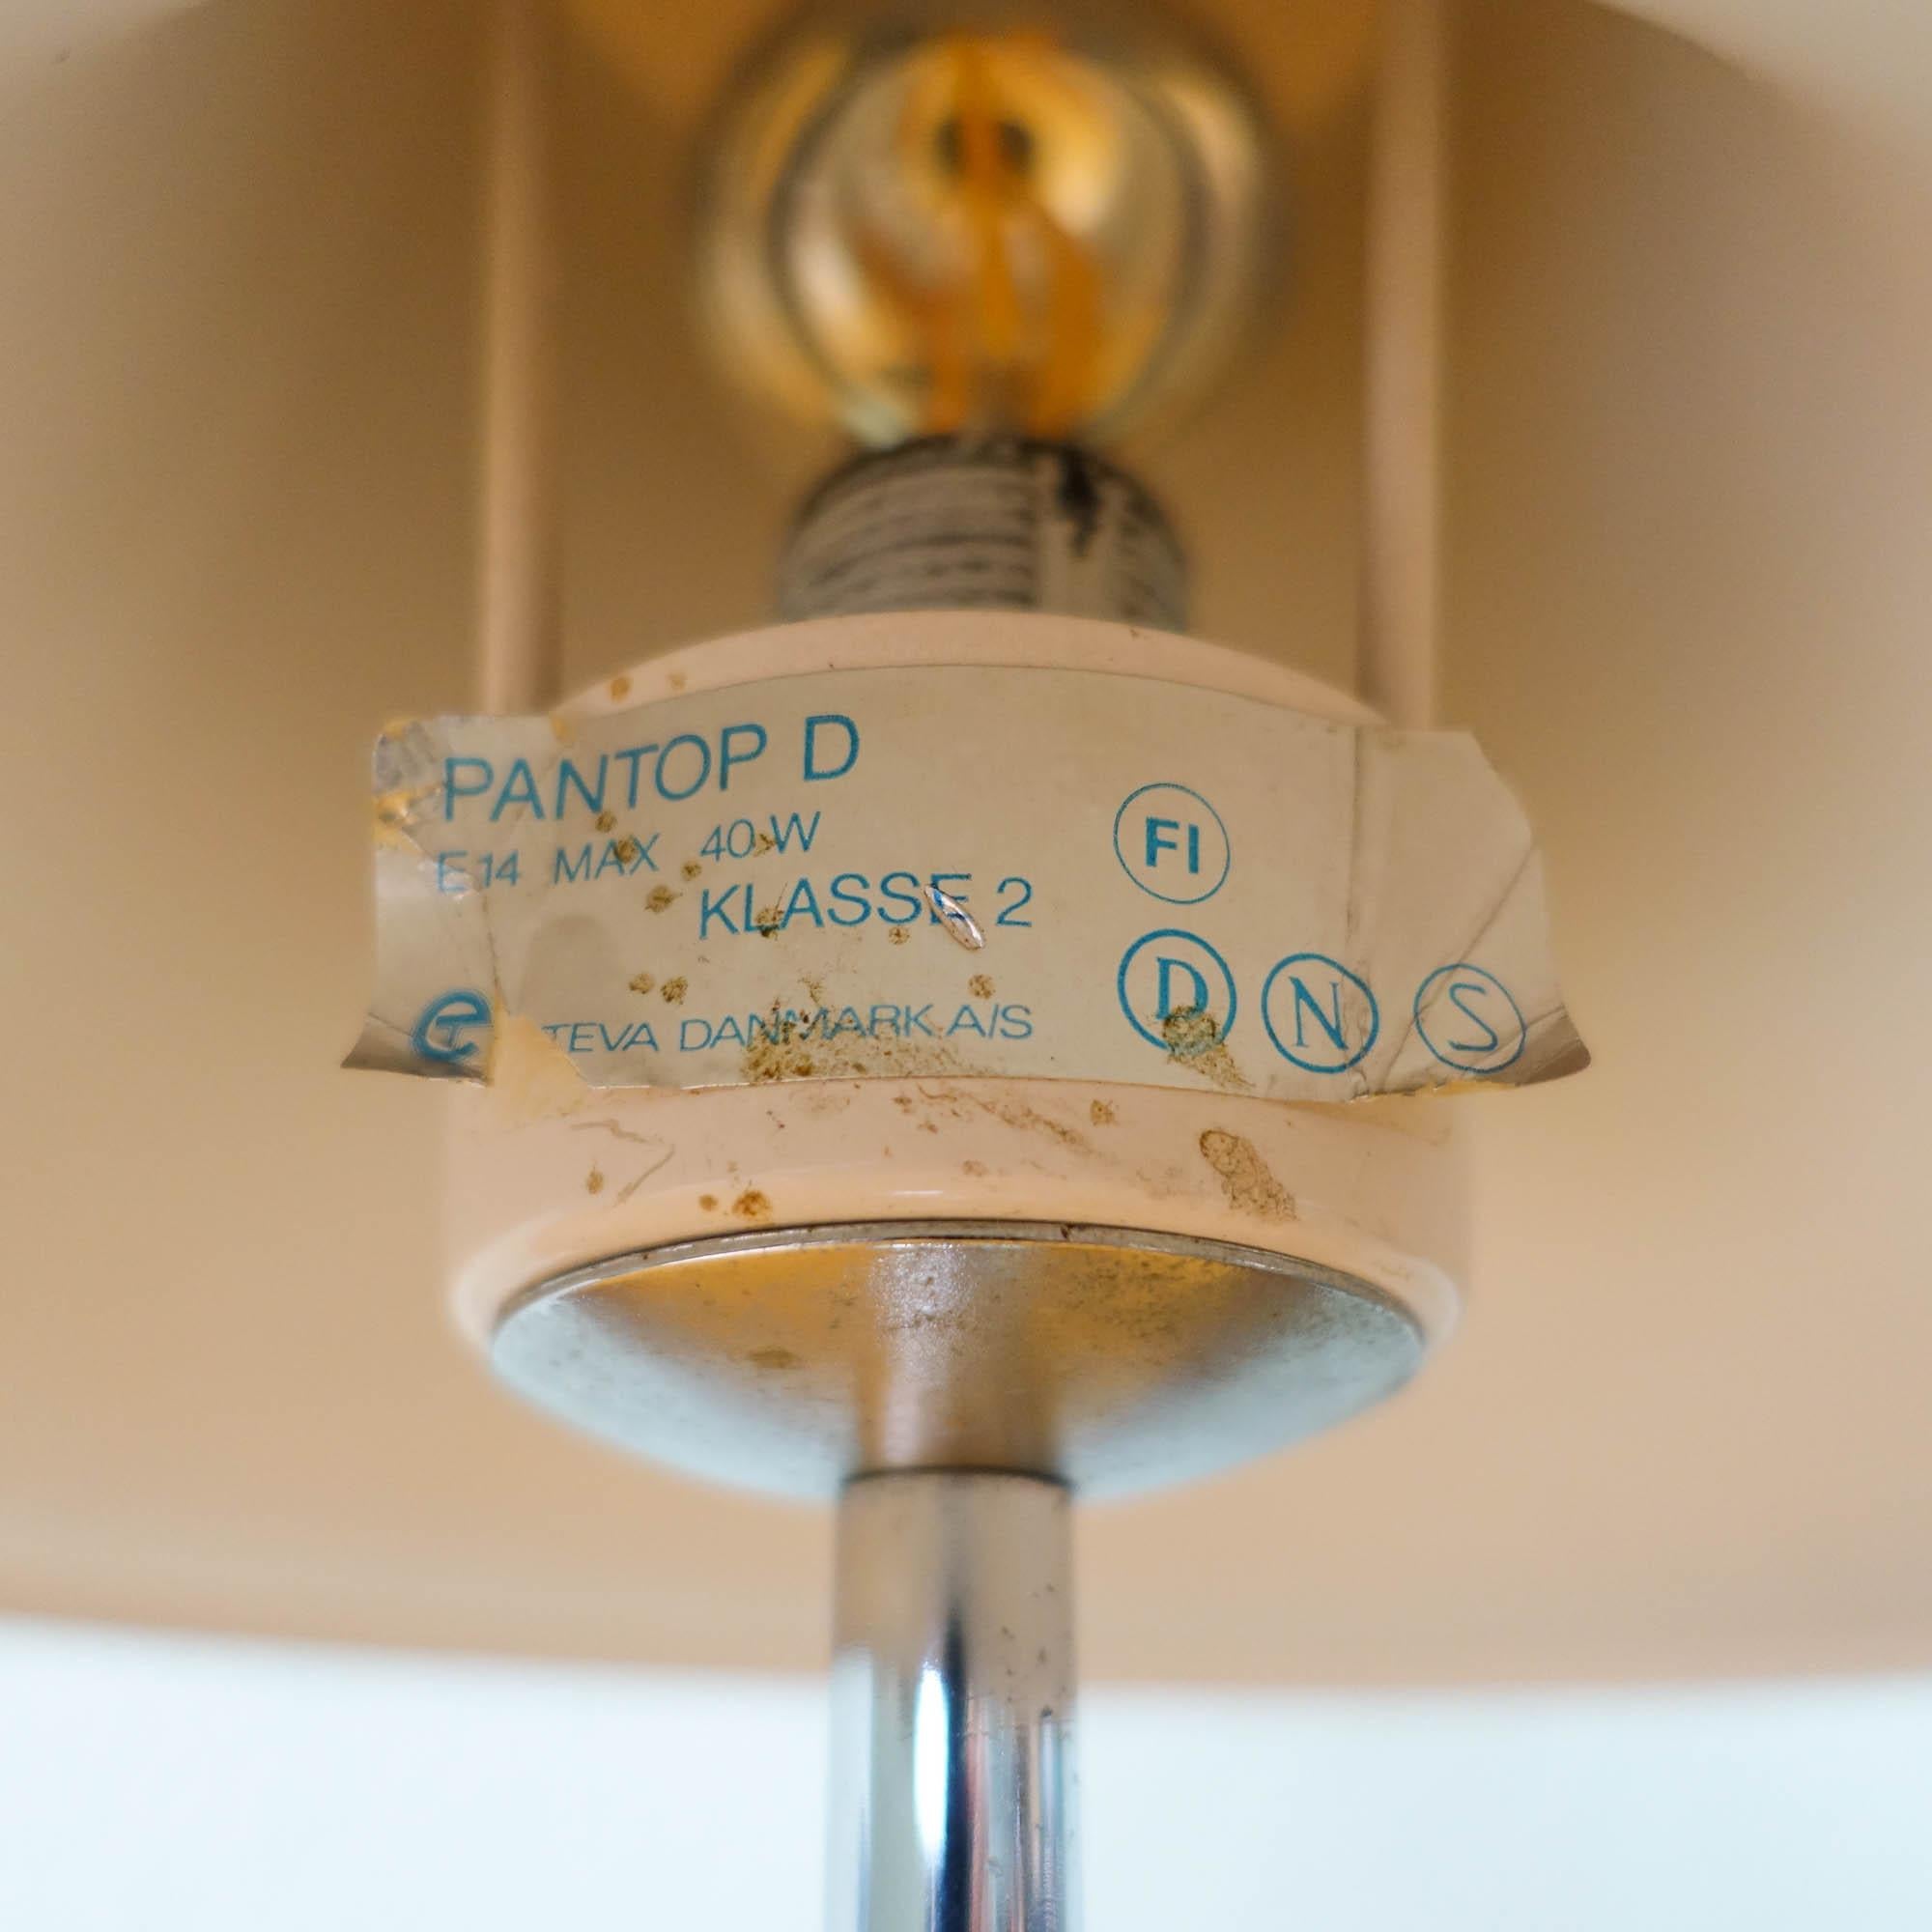 Pantop D Table Lamp by Verner Panton for Elteva Danmark A/S 2